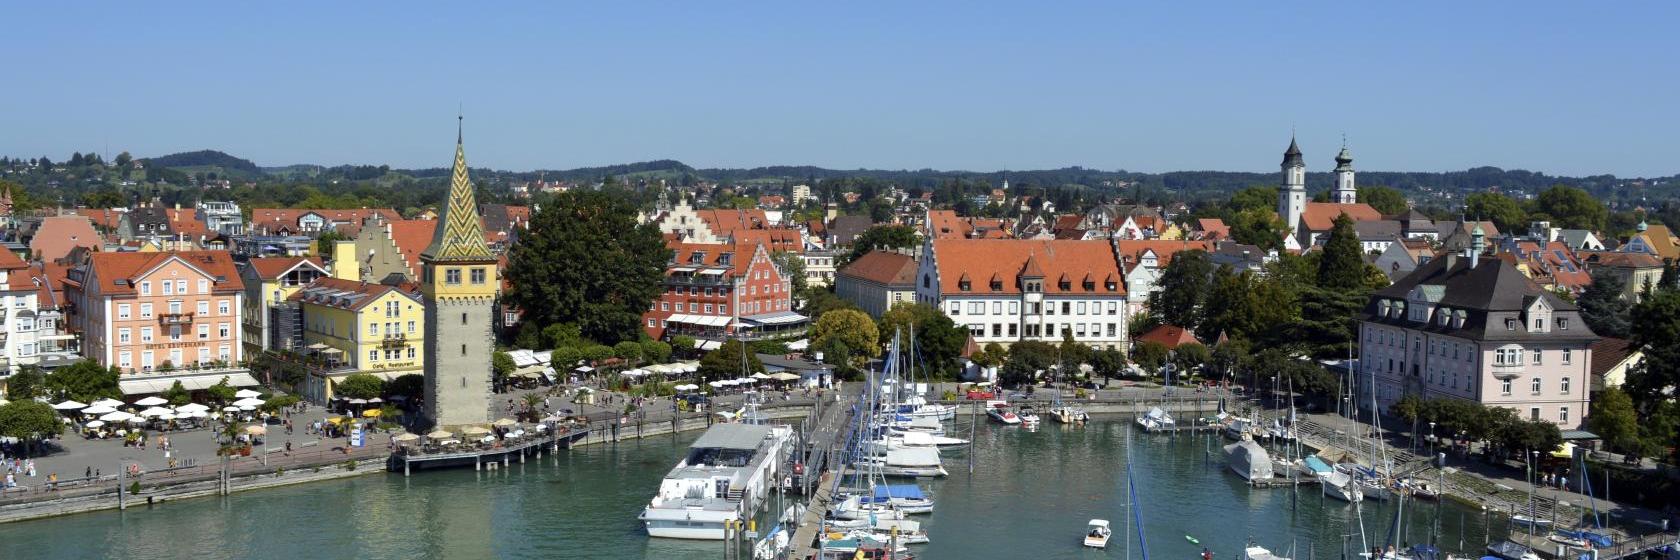 10 Best Lindau Hotels, Germany (From $61)